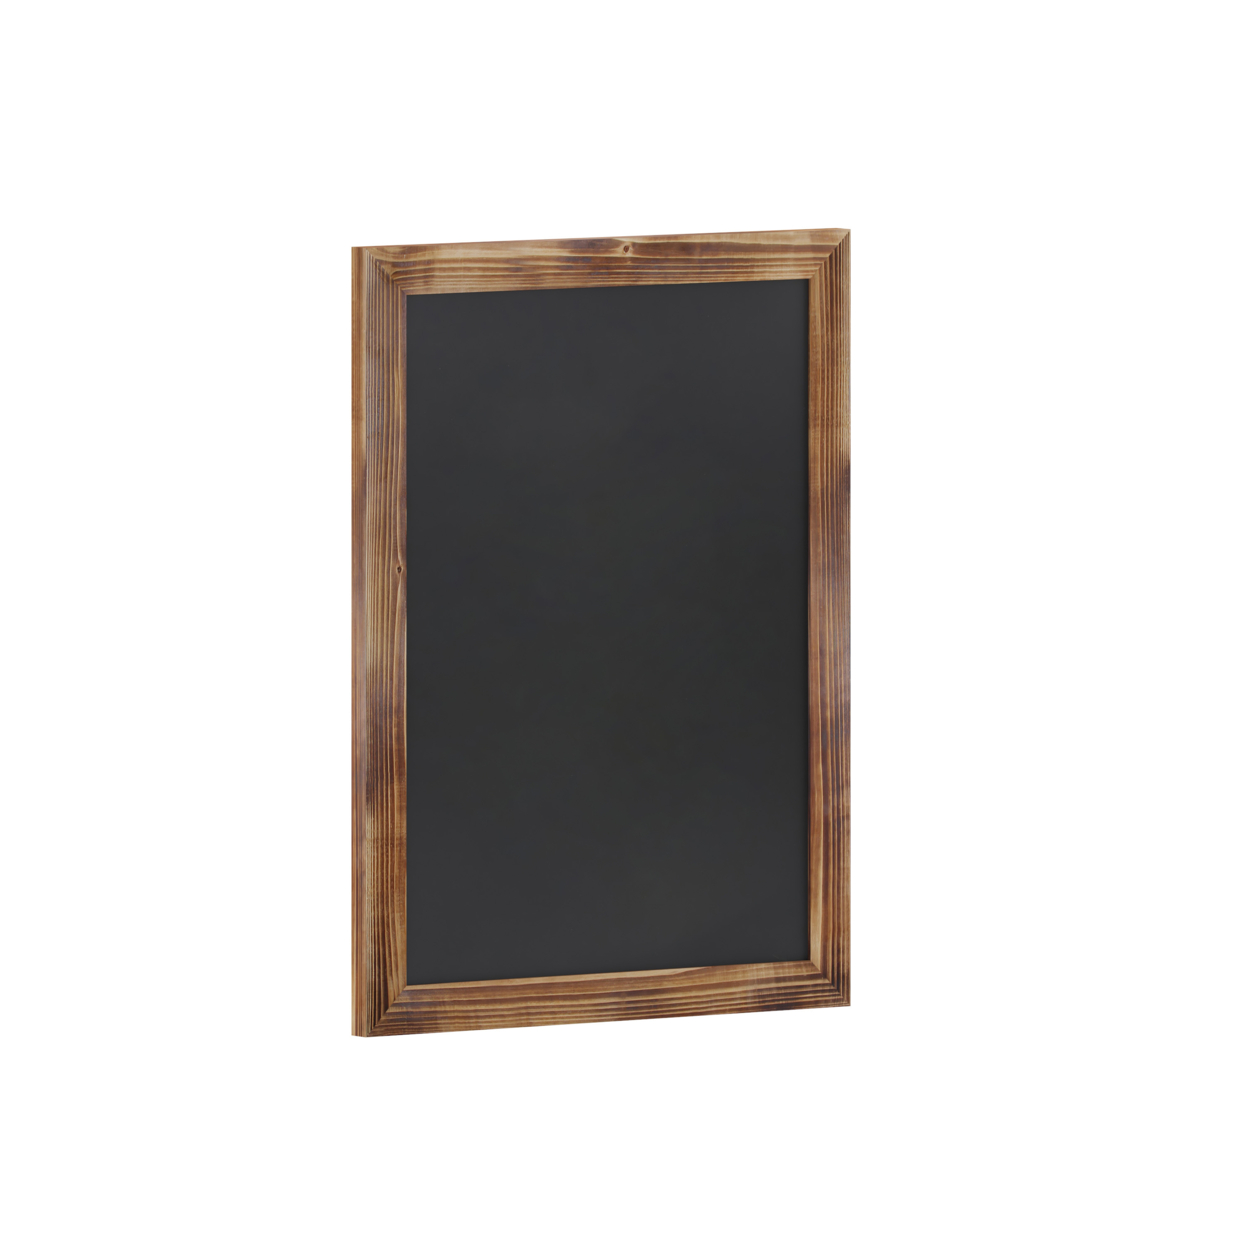 24 Inch Wall Hanging Chalkboard, Memo Board, Eraser, Brown Wood Frame